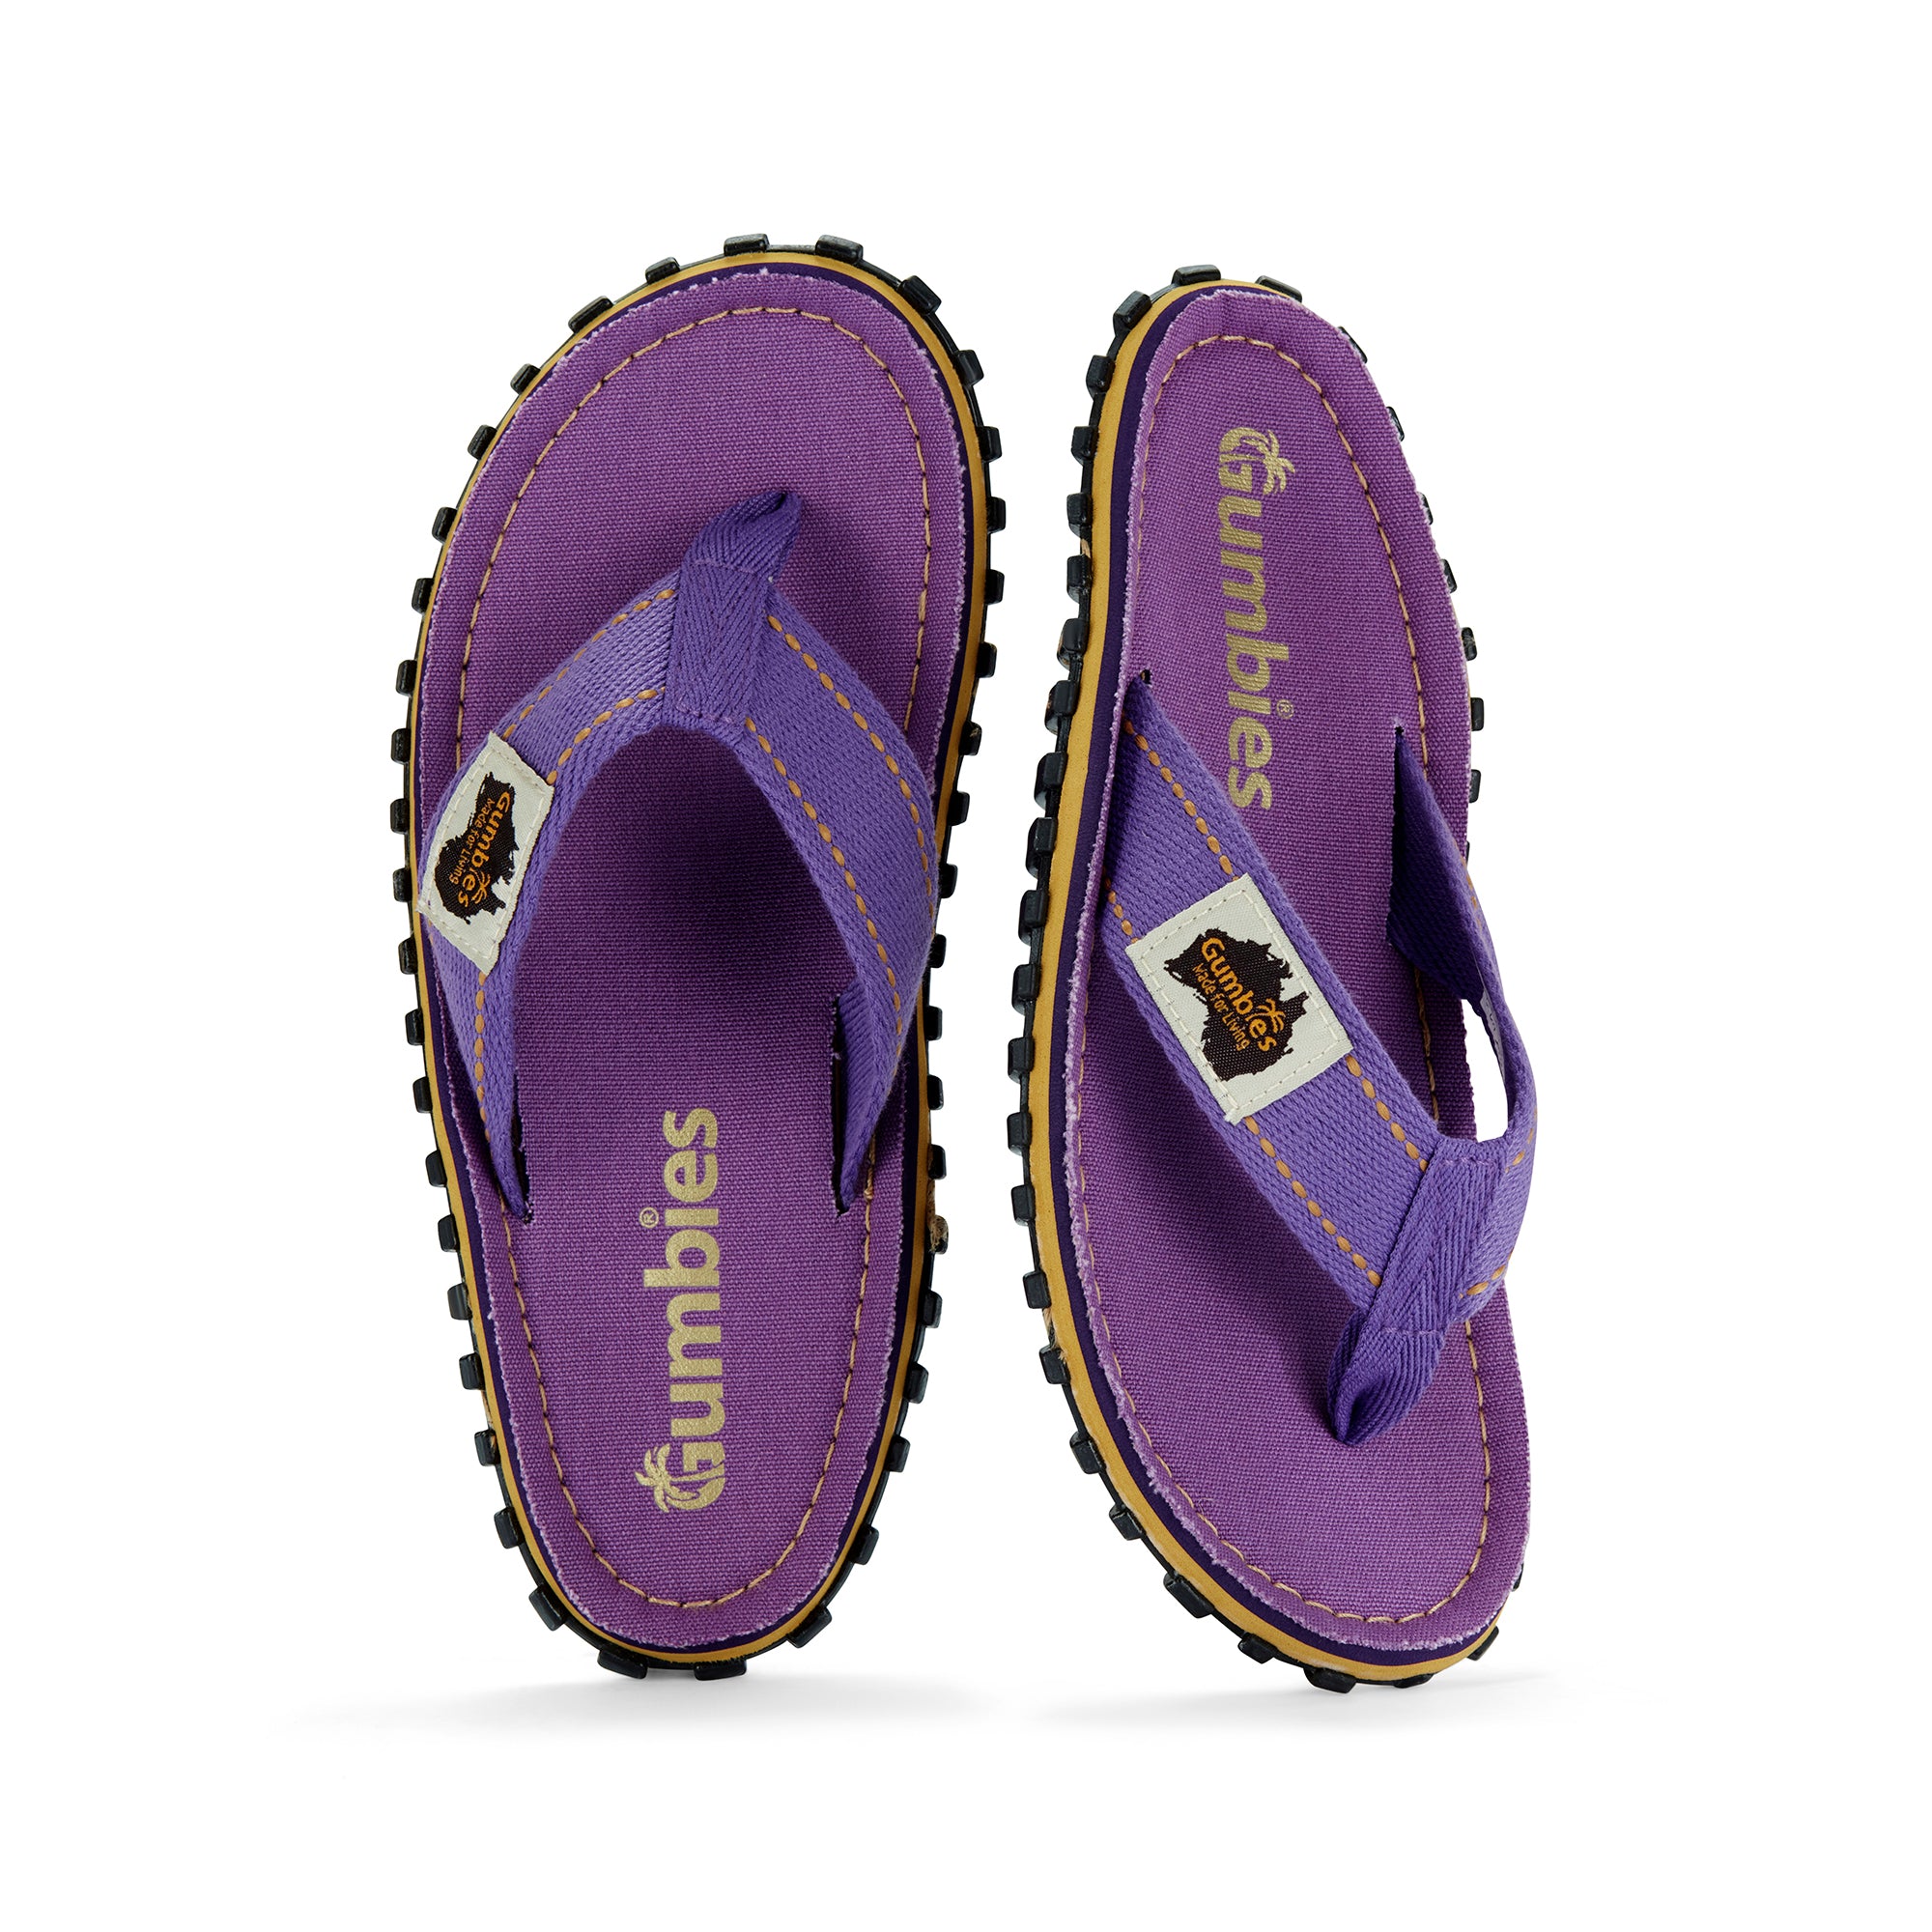 Islander Thongs - Women's - Classic Purple